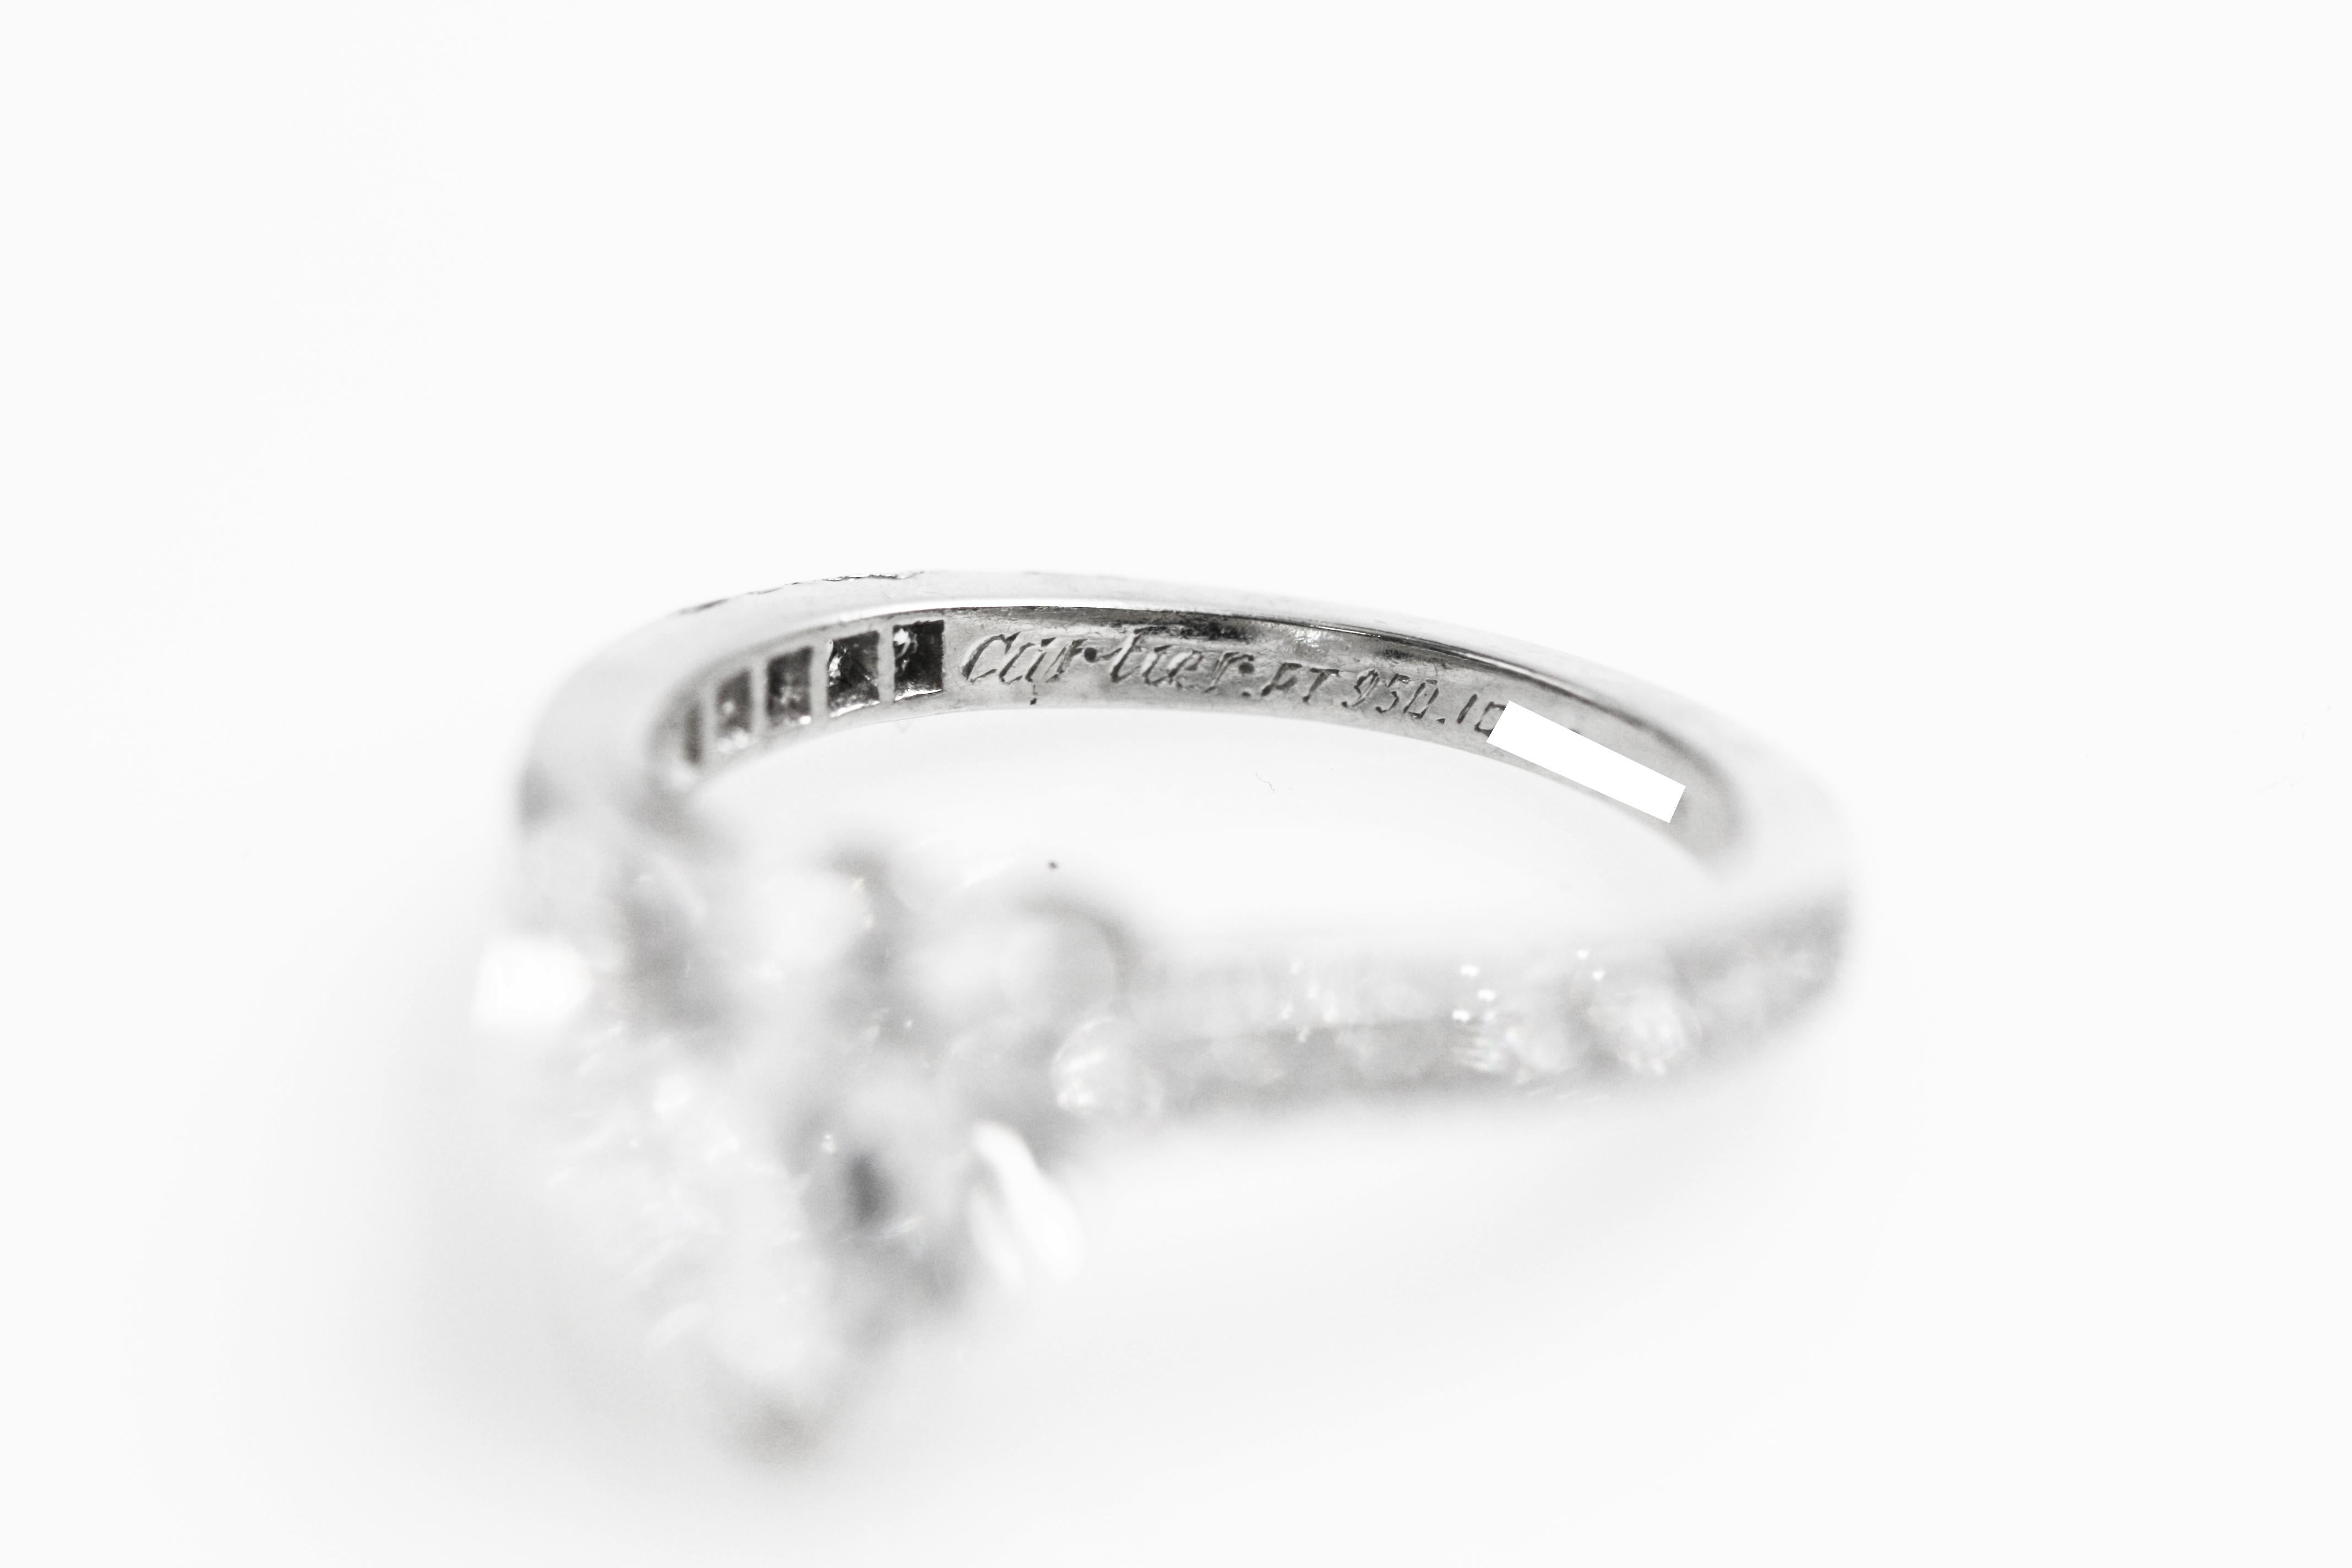 69-carat cartier diamond ring